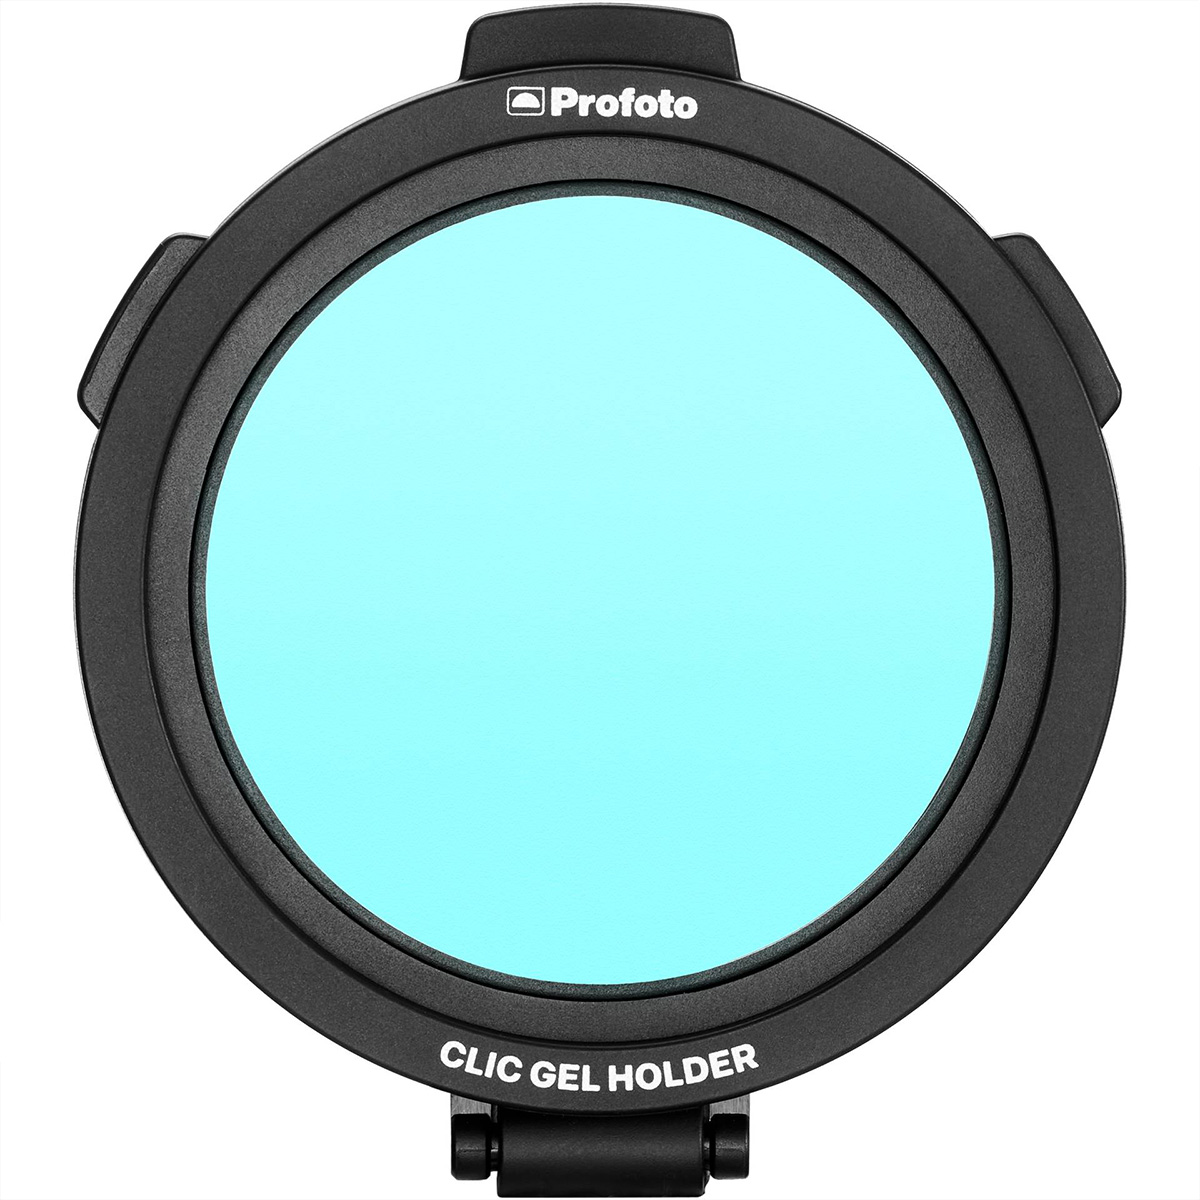 Profoto Clic Gel Holder